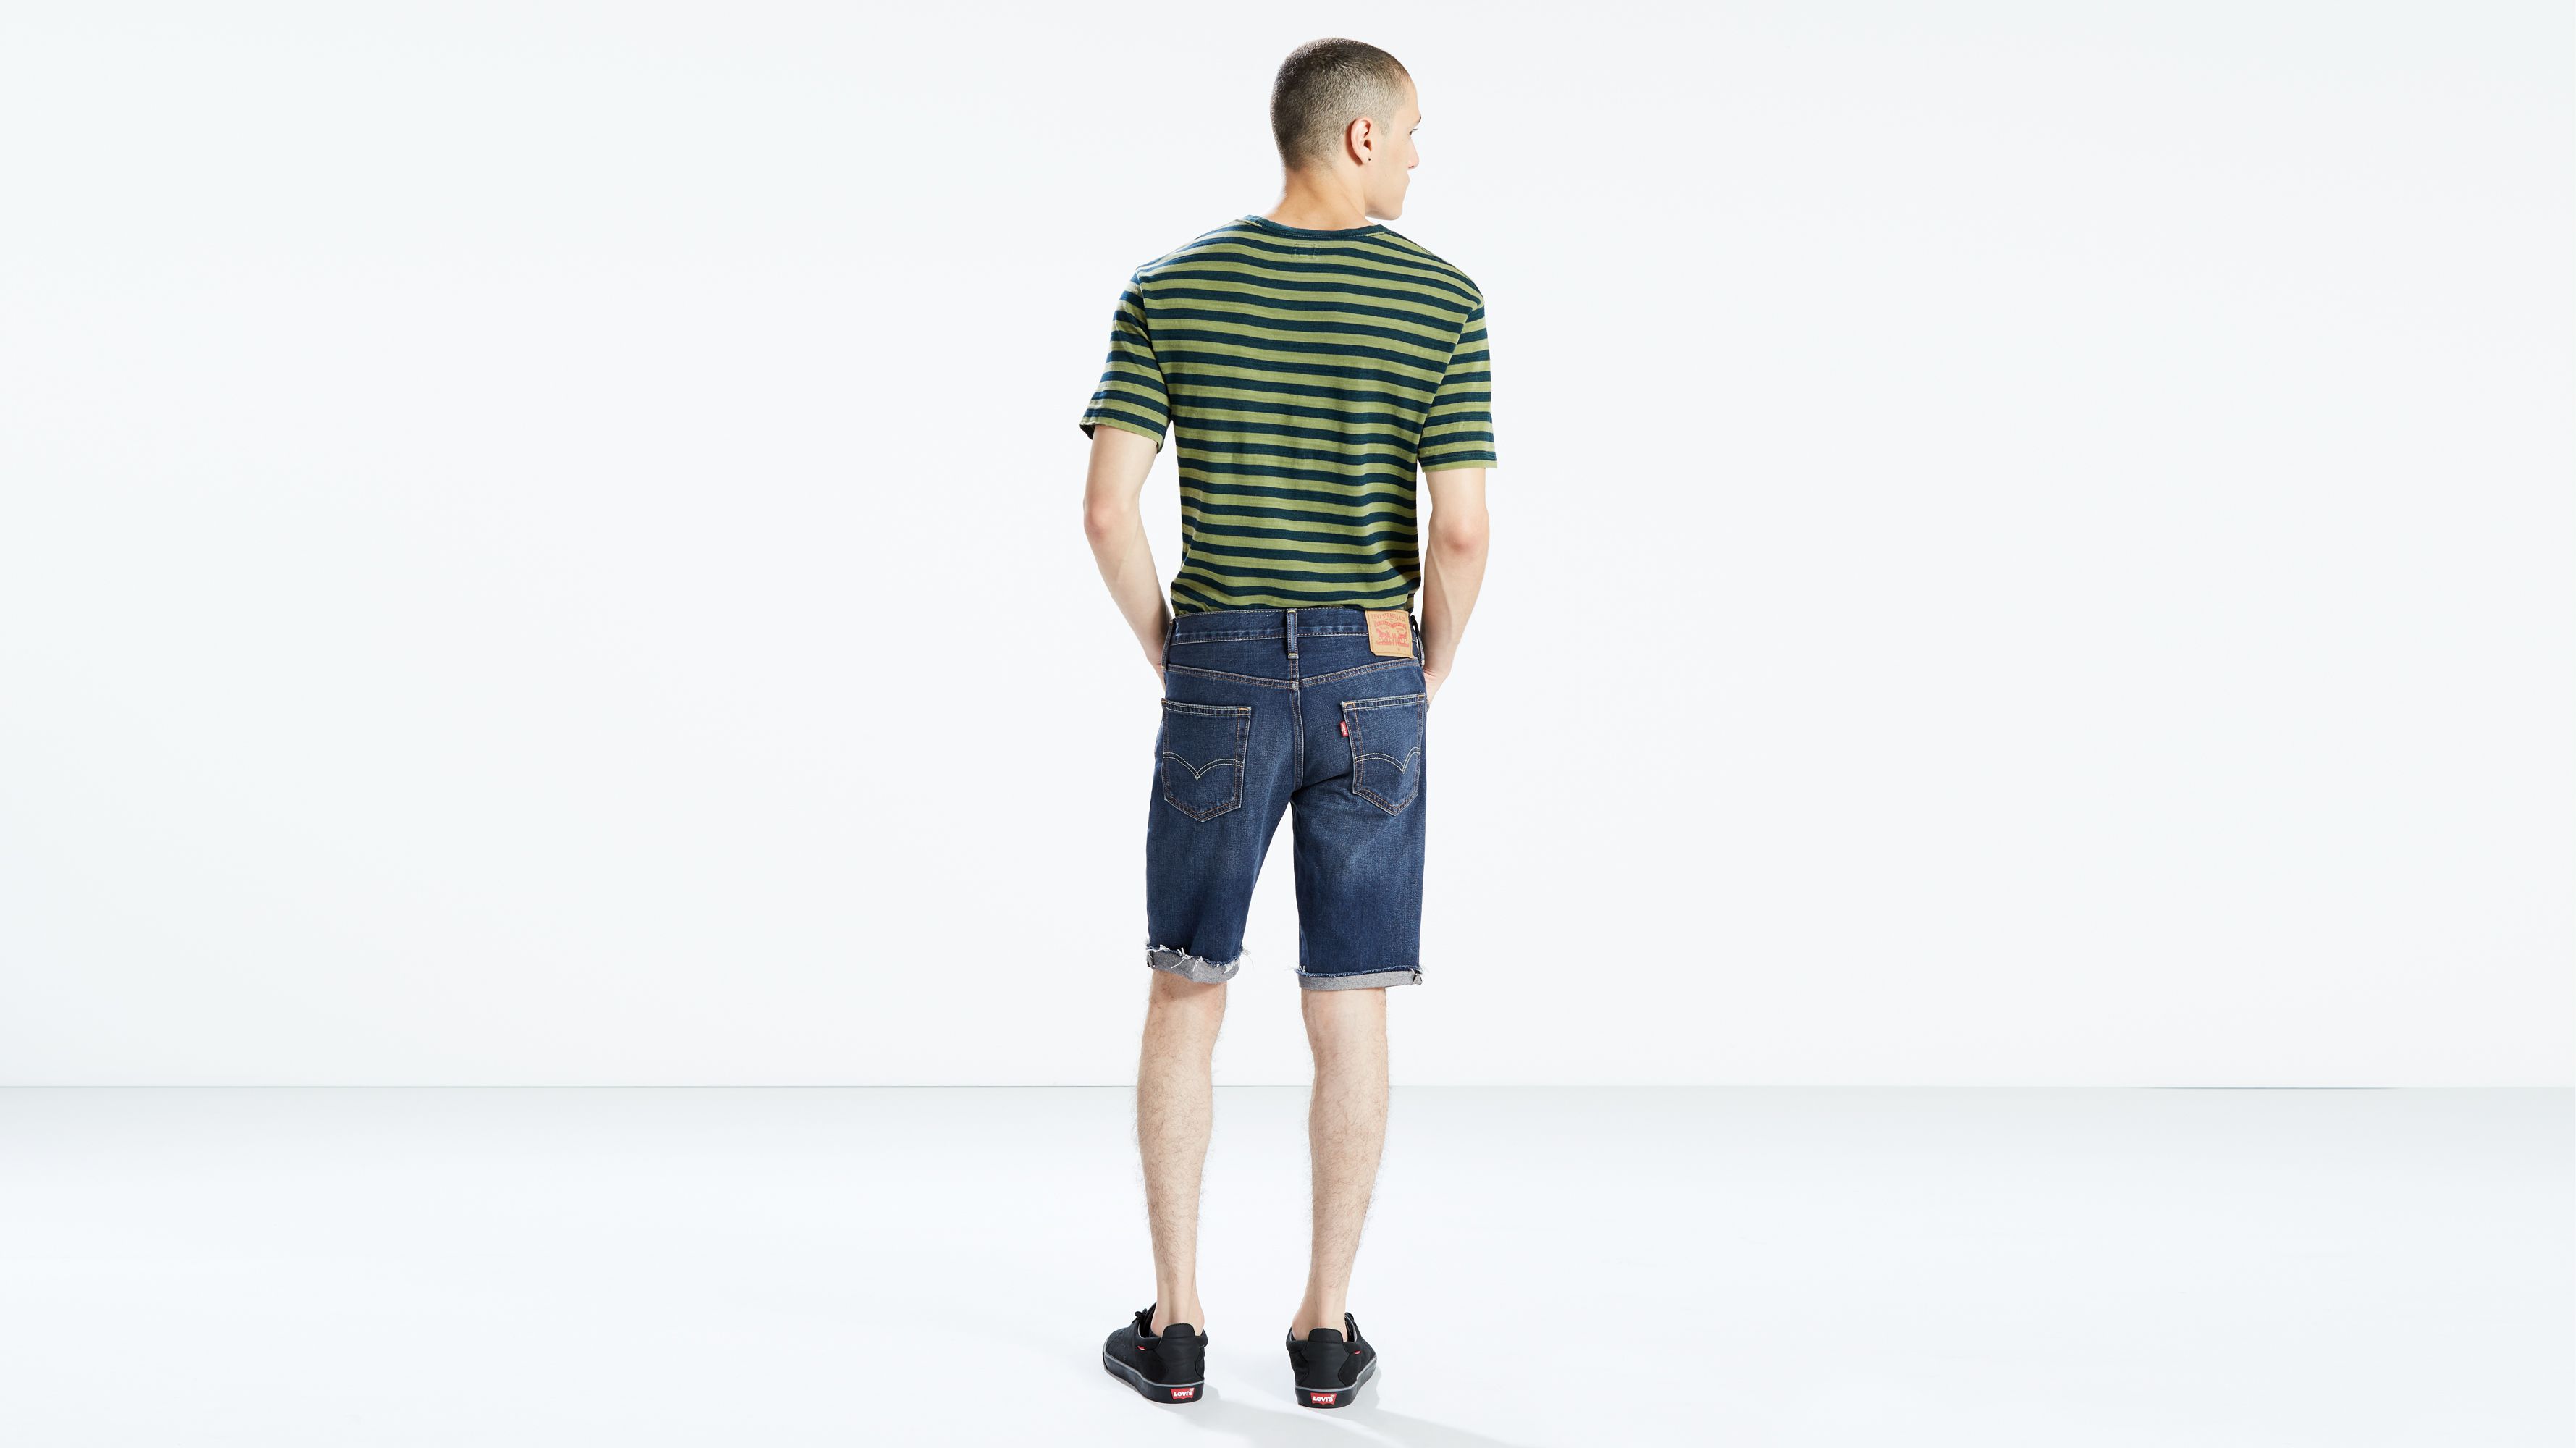 511 men's slim cutoff shorts